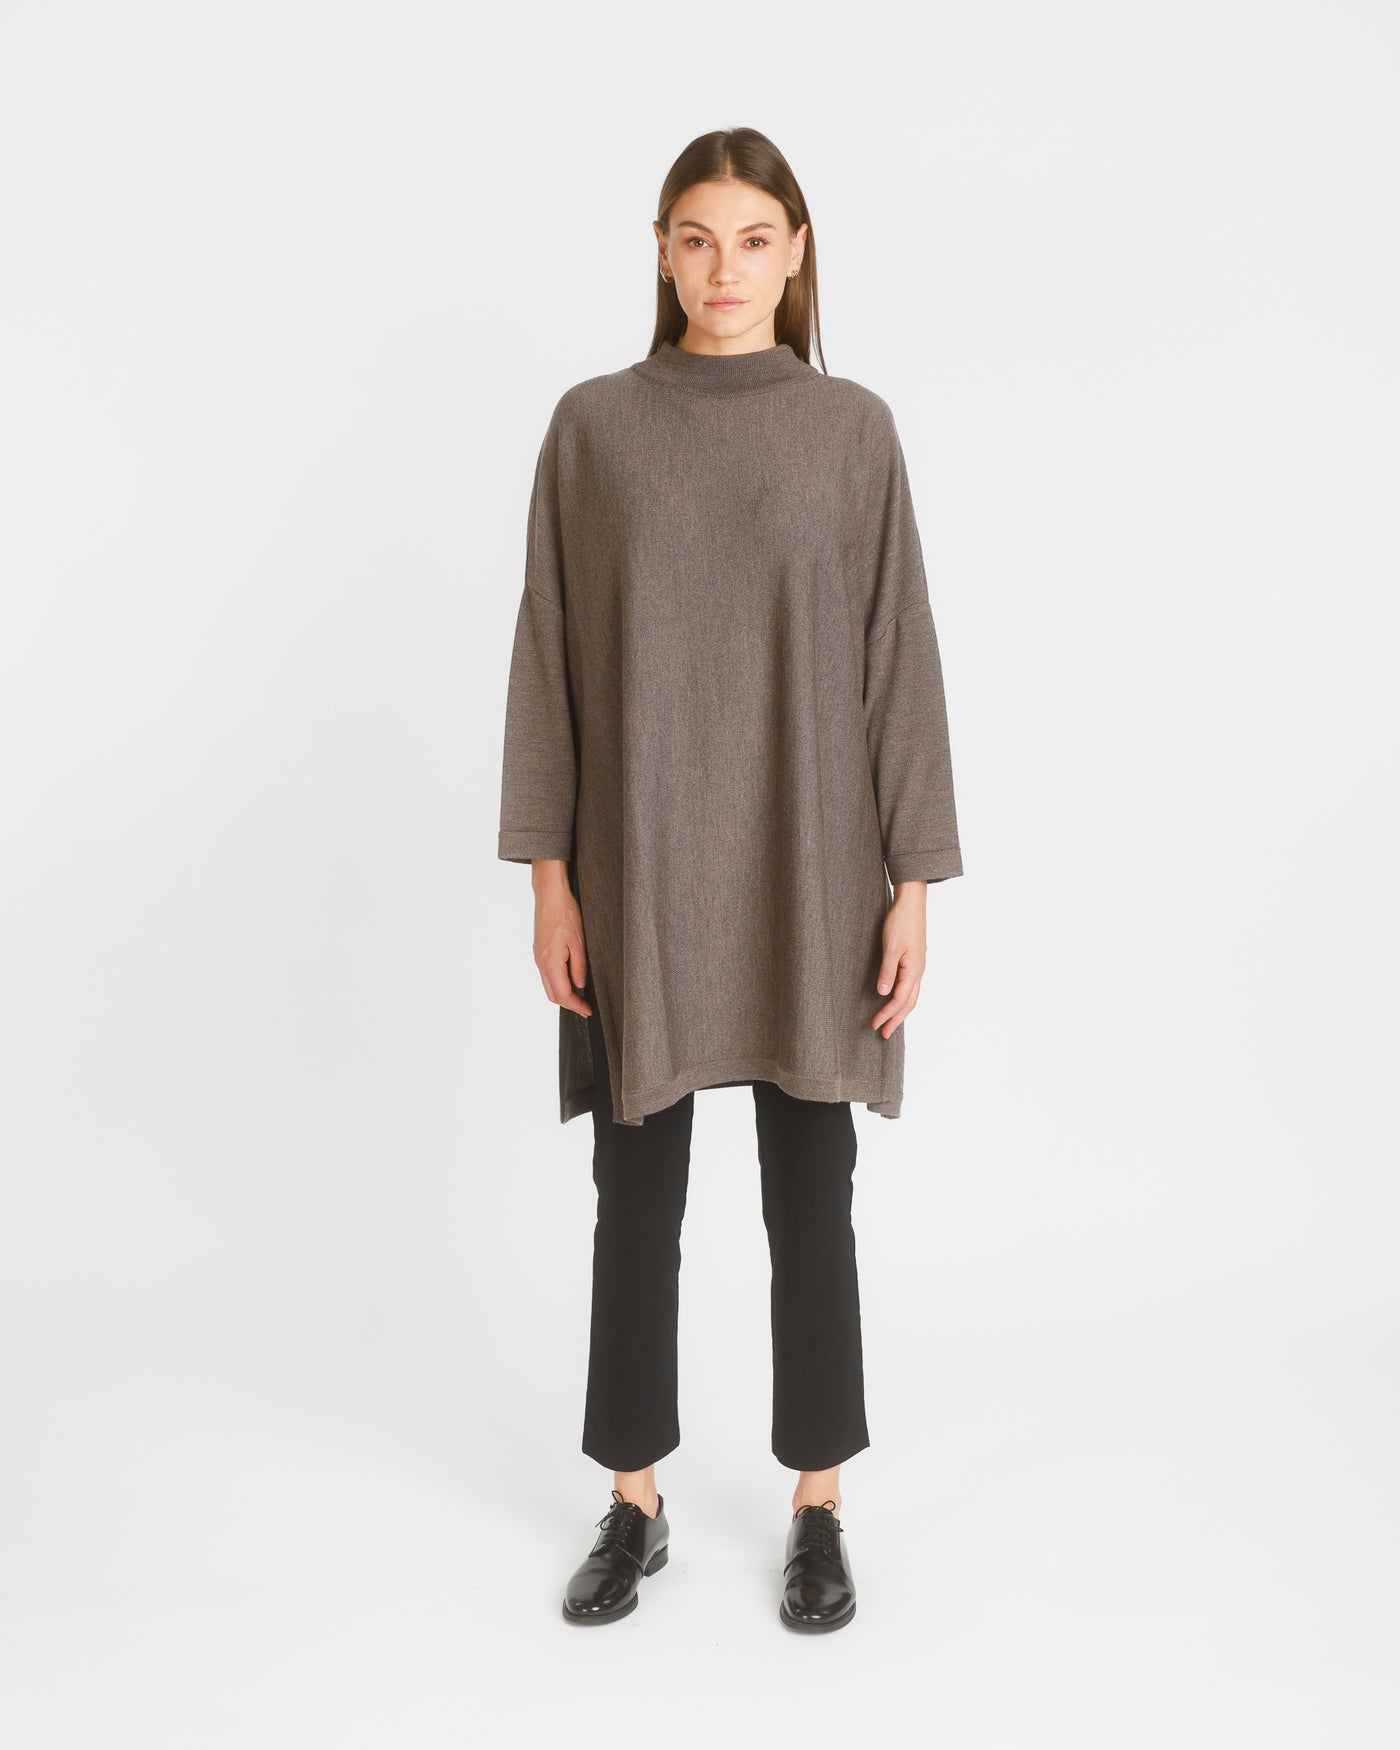 Vilna  Merino Sweater Tunic. Taupe. One Size